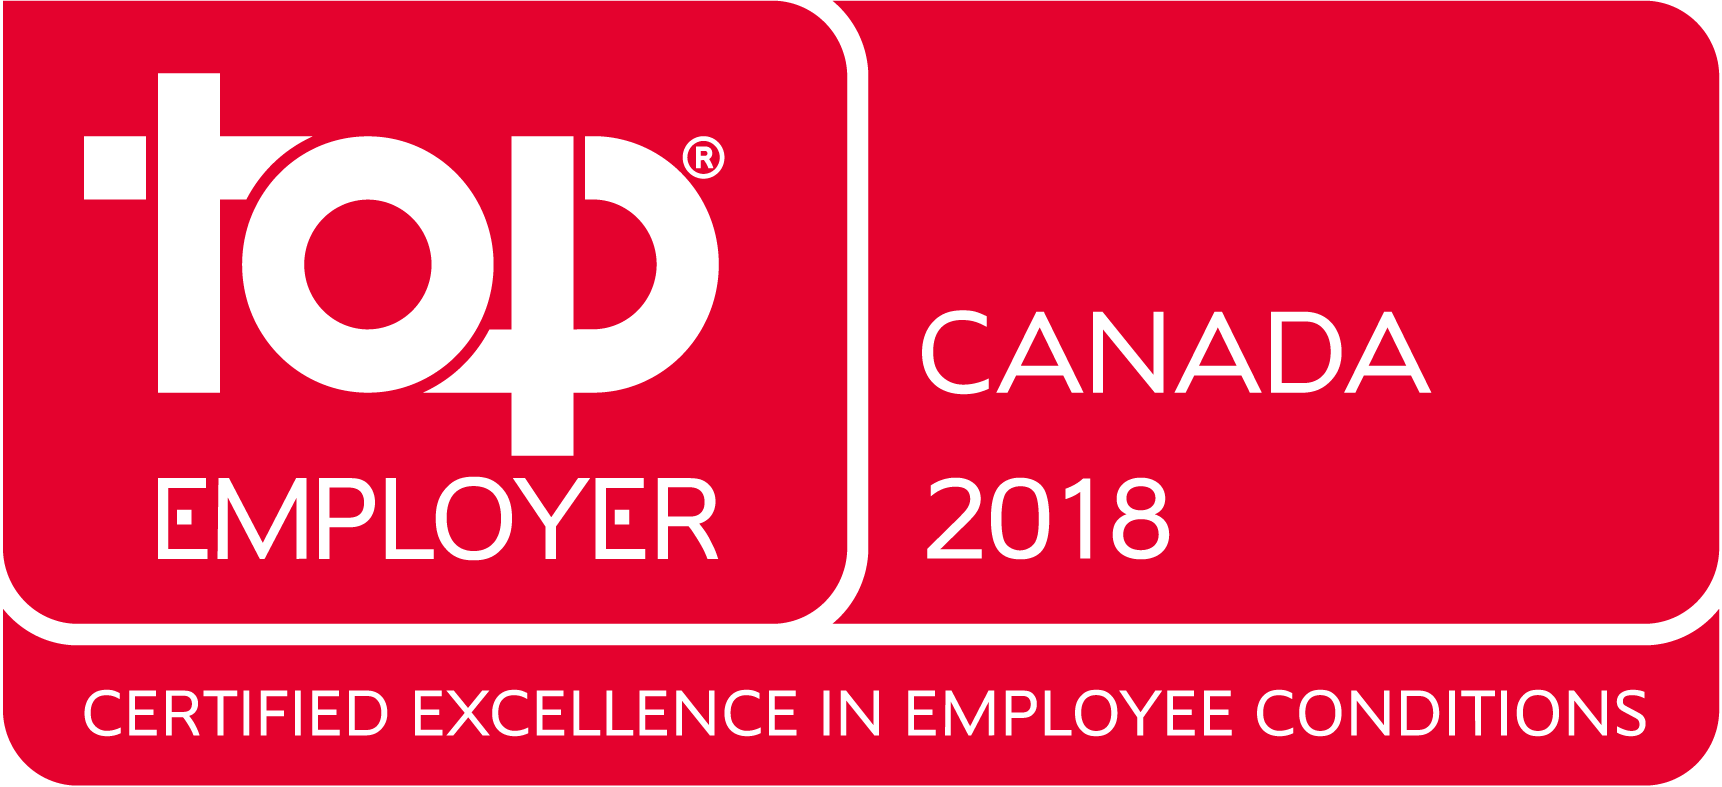 Top_Employer_Canada_2018